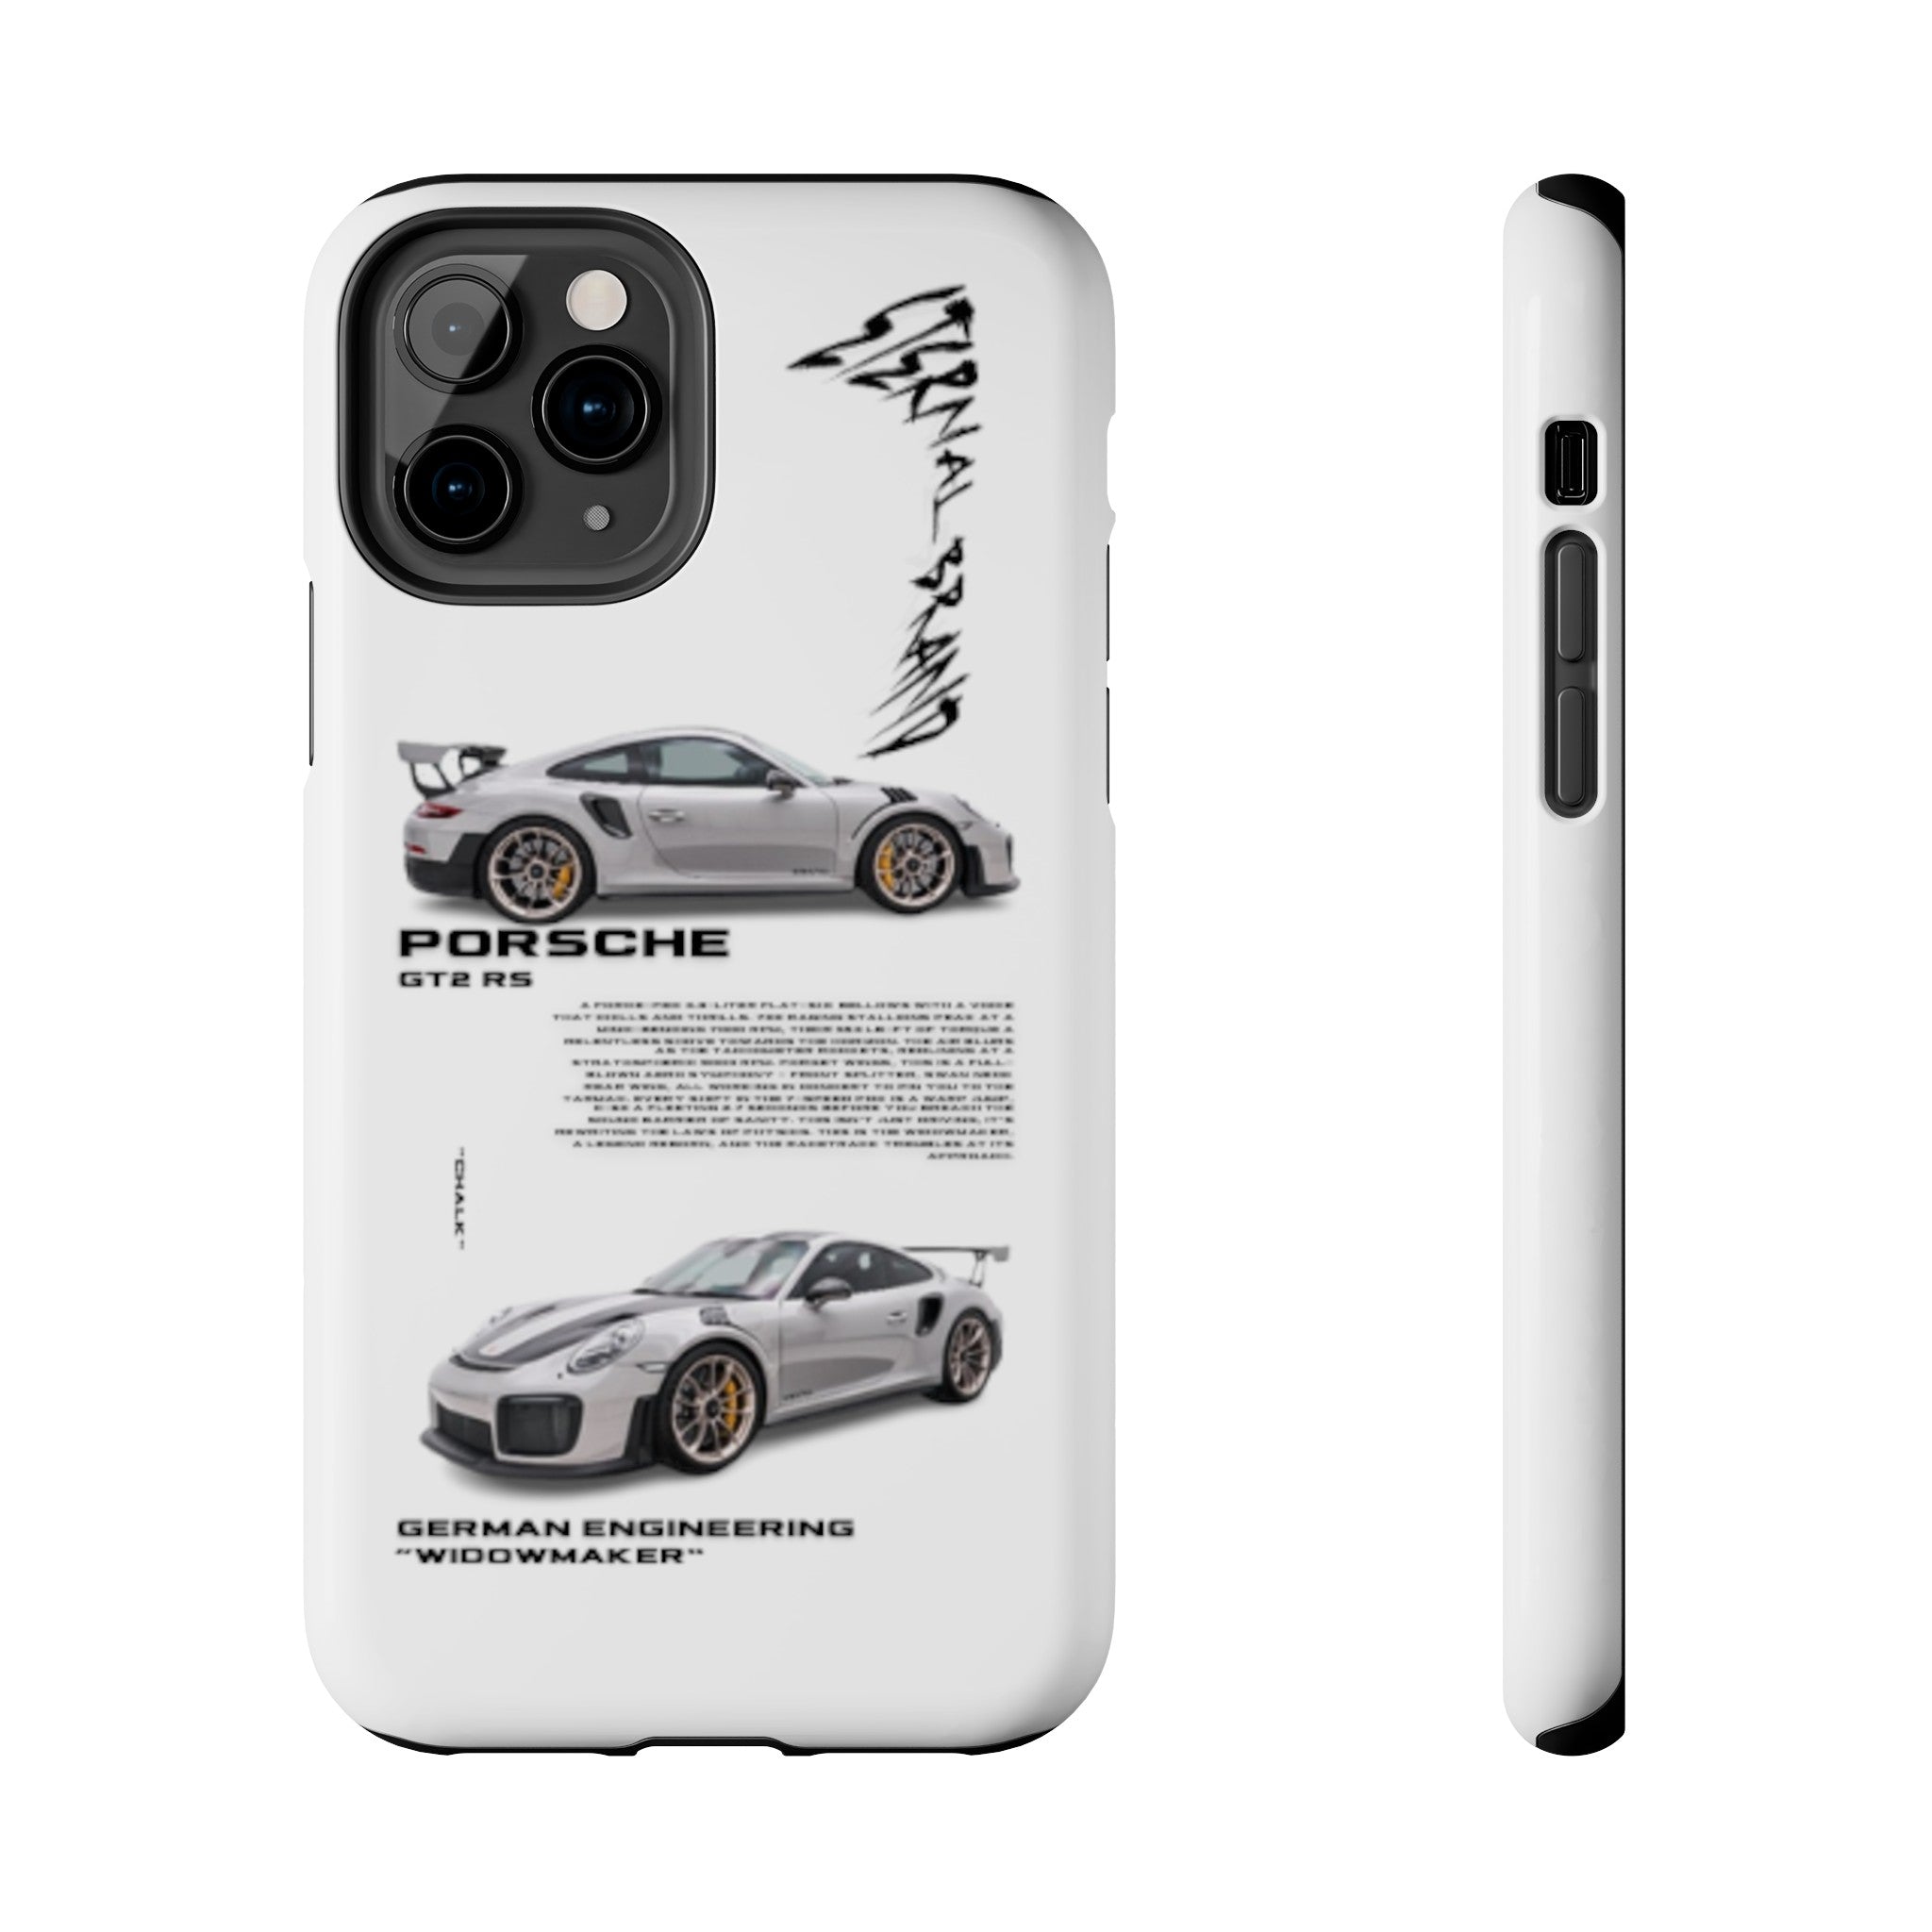 Porsche GT2 RS "Chalk"